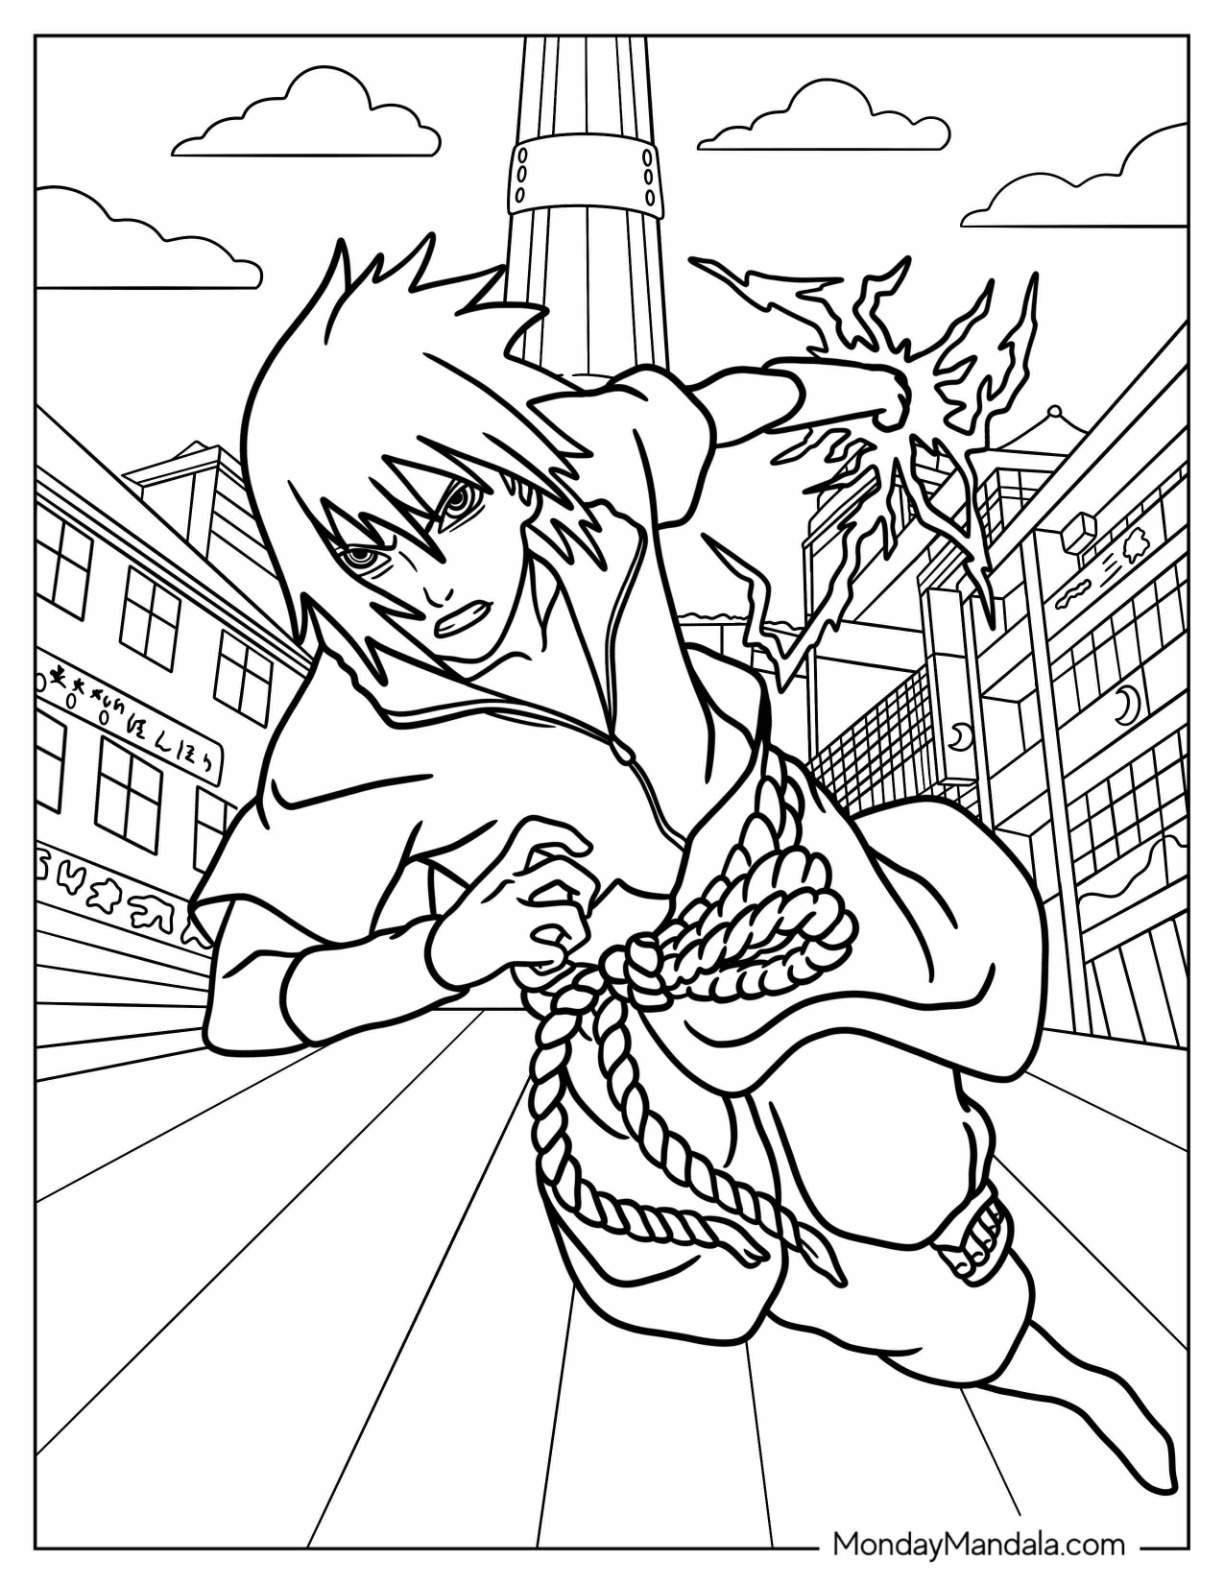 Sasuke coloring pages free pdf printables